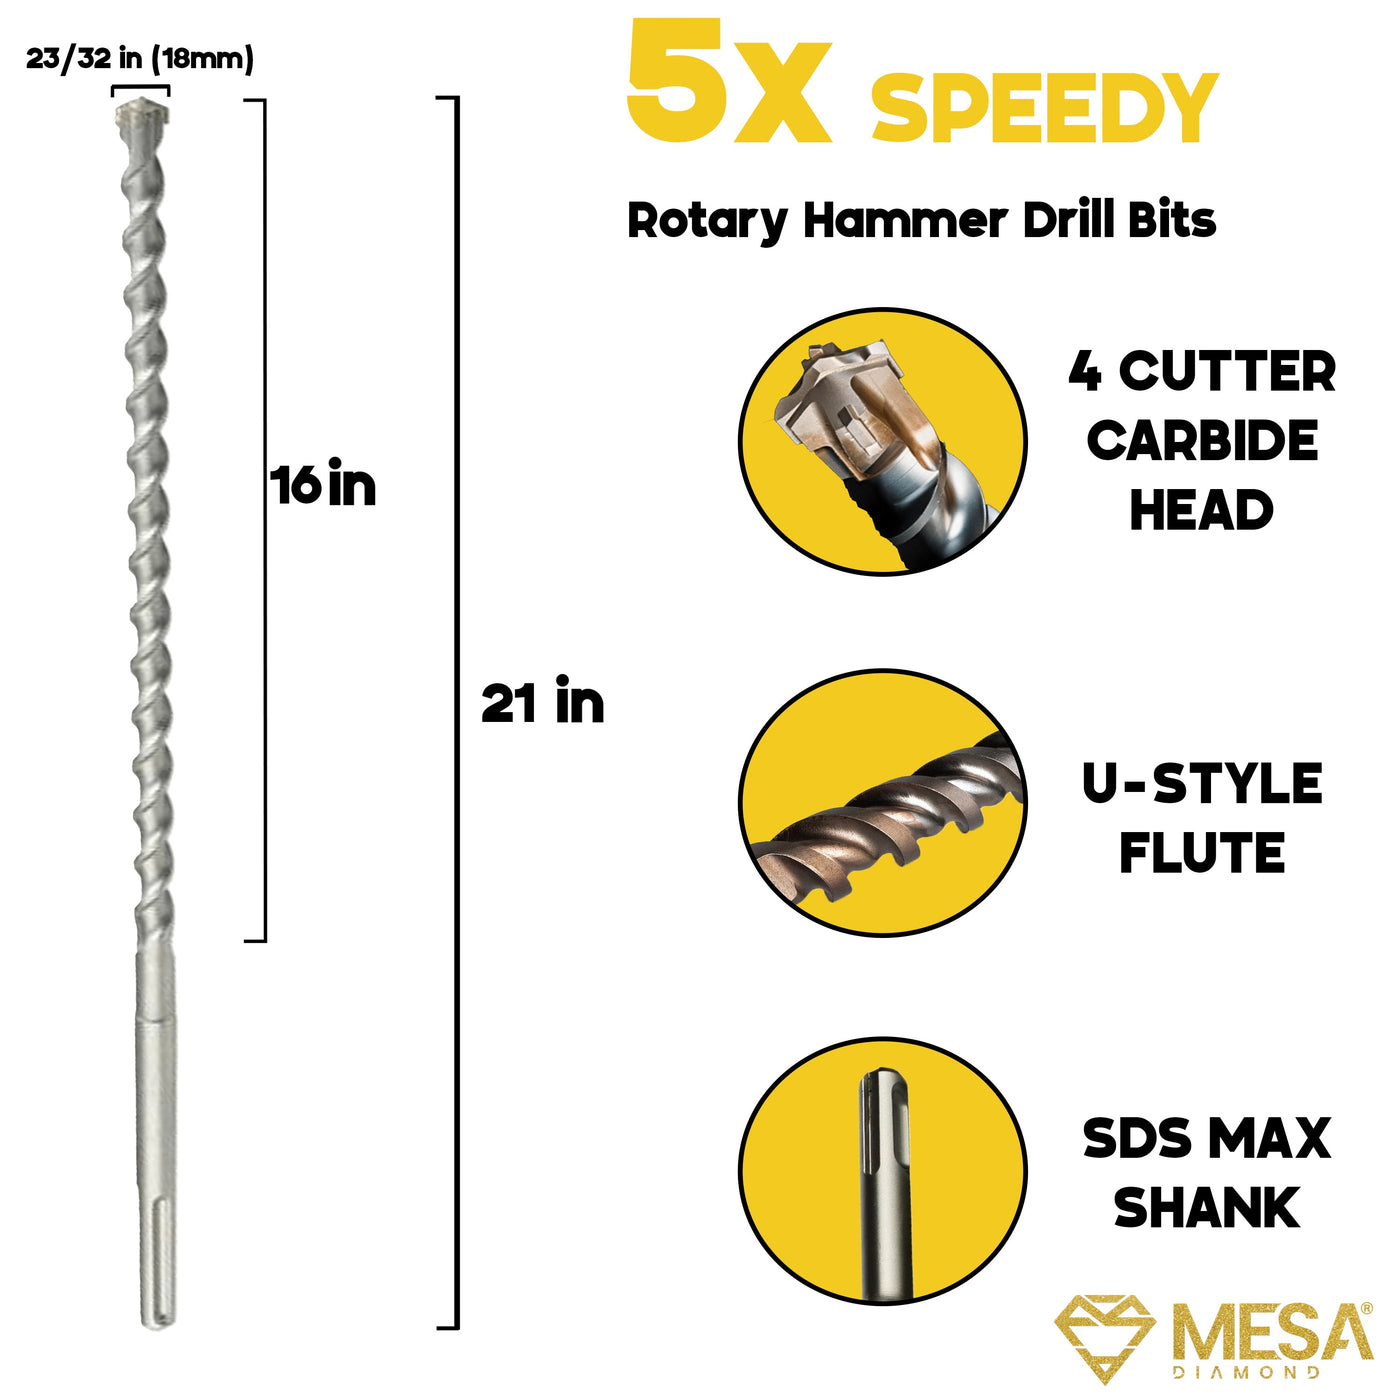 4 CUTTER SDS MAX Masonry Drill BitMESA DIAMOND®4SDSMAX182123/32 in (18mm)23/32 in (18mm)21 in